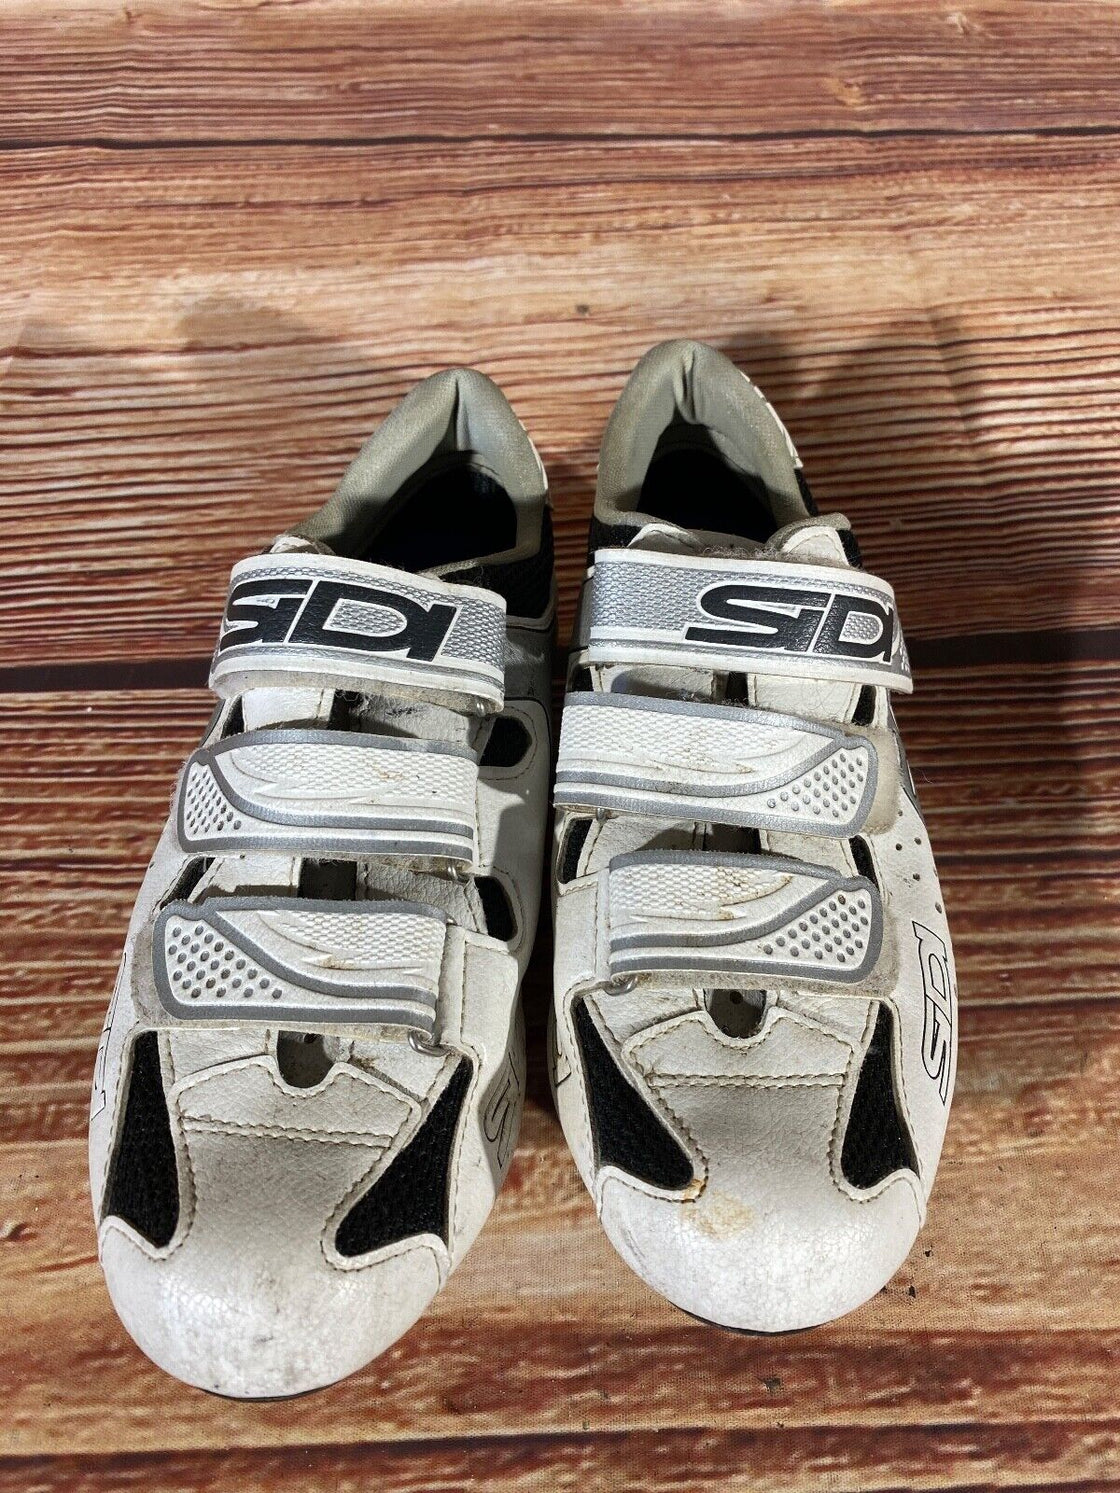 SIDI Carbon Road Cycling Shoes Road 3 Bolts Unisex Size EU39 US6 Mondo 236